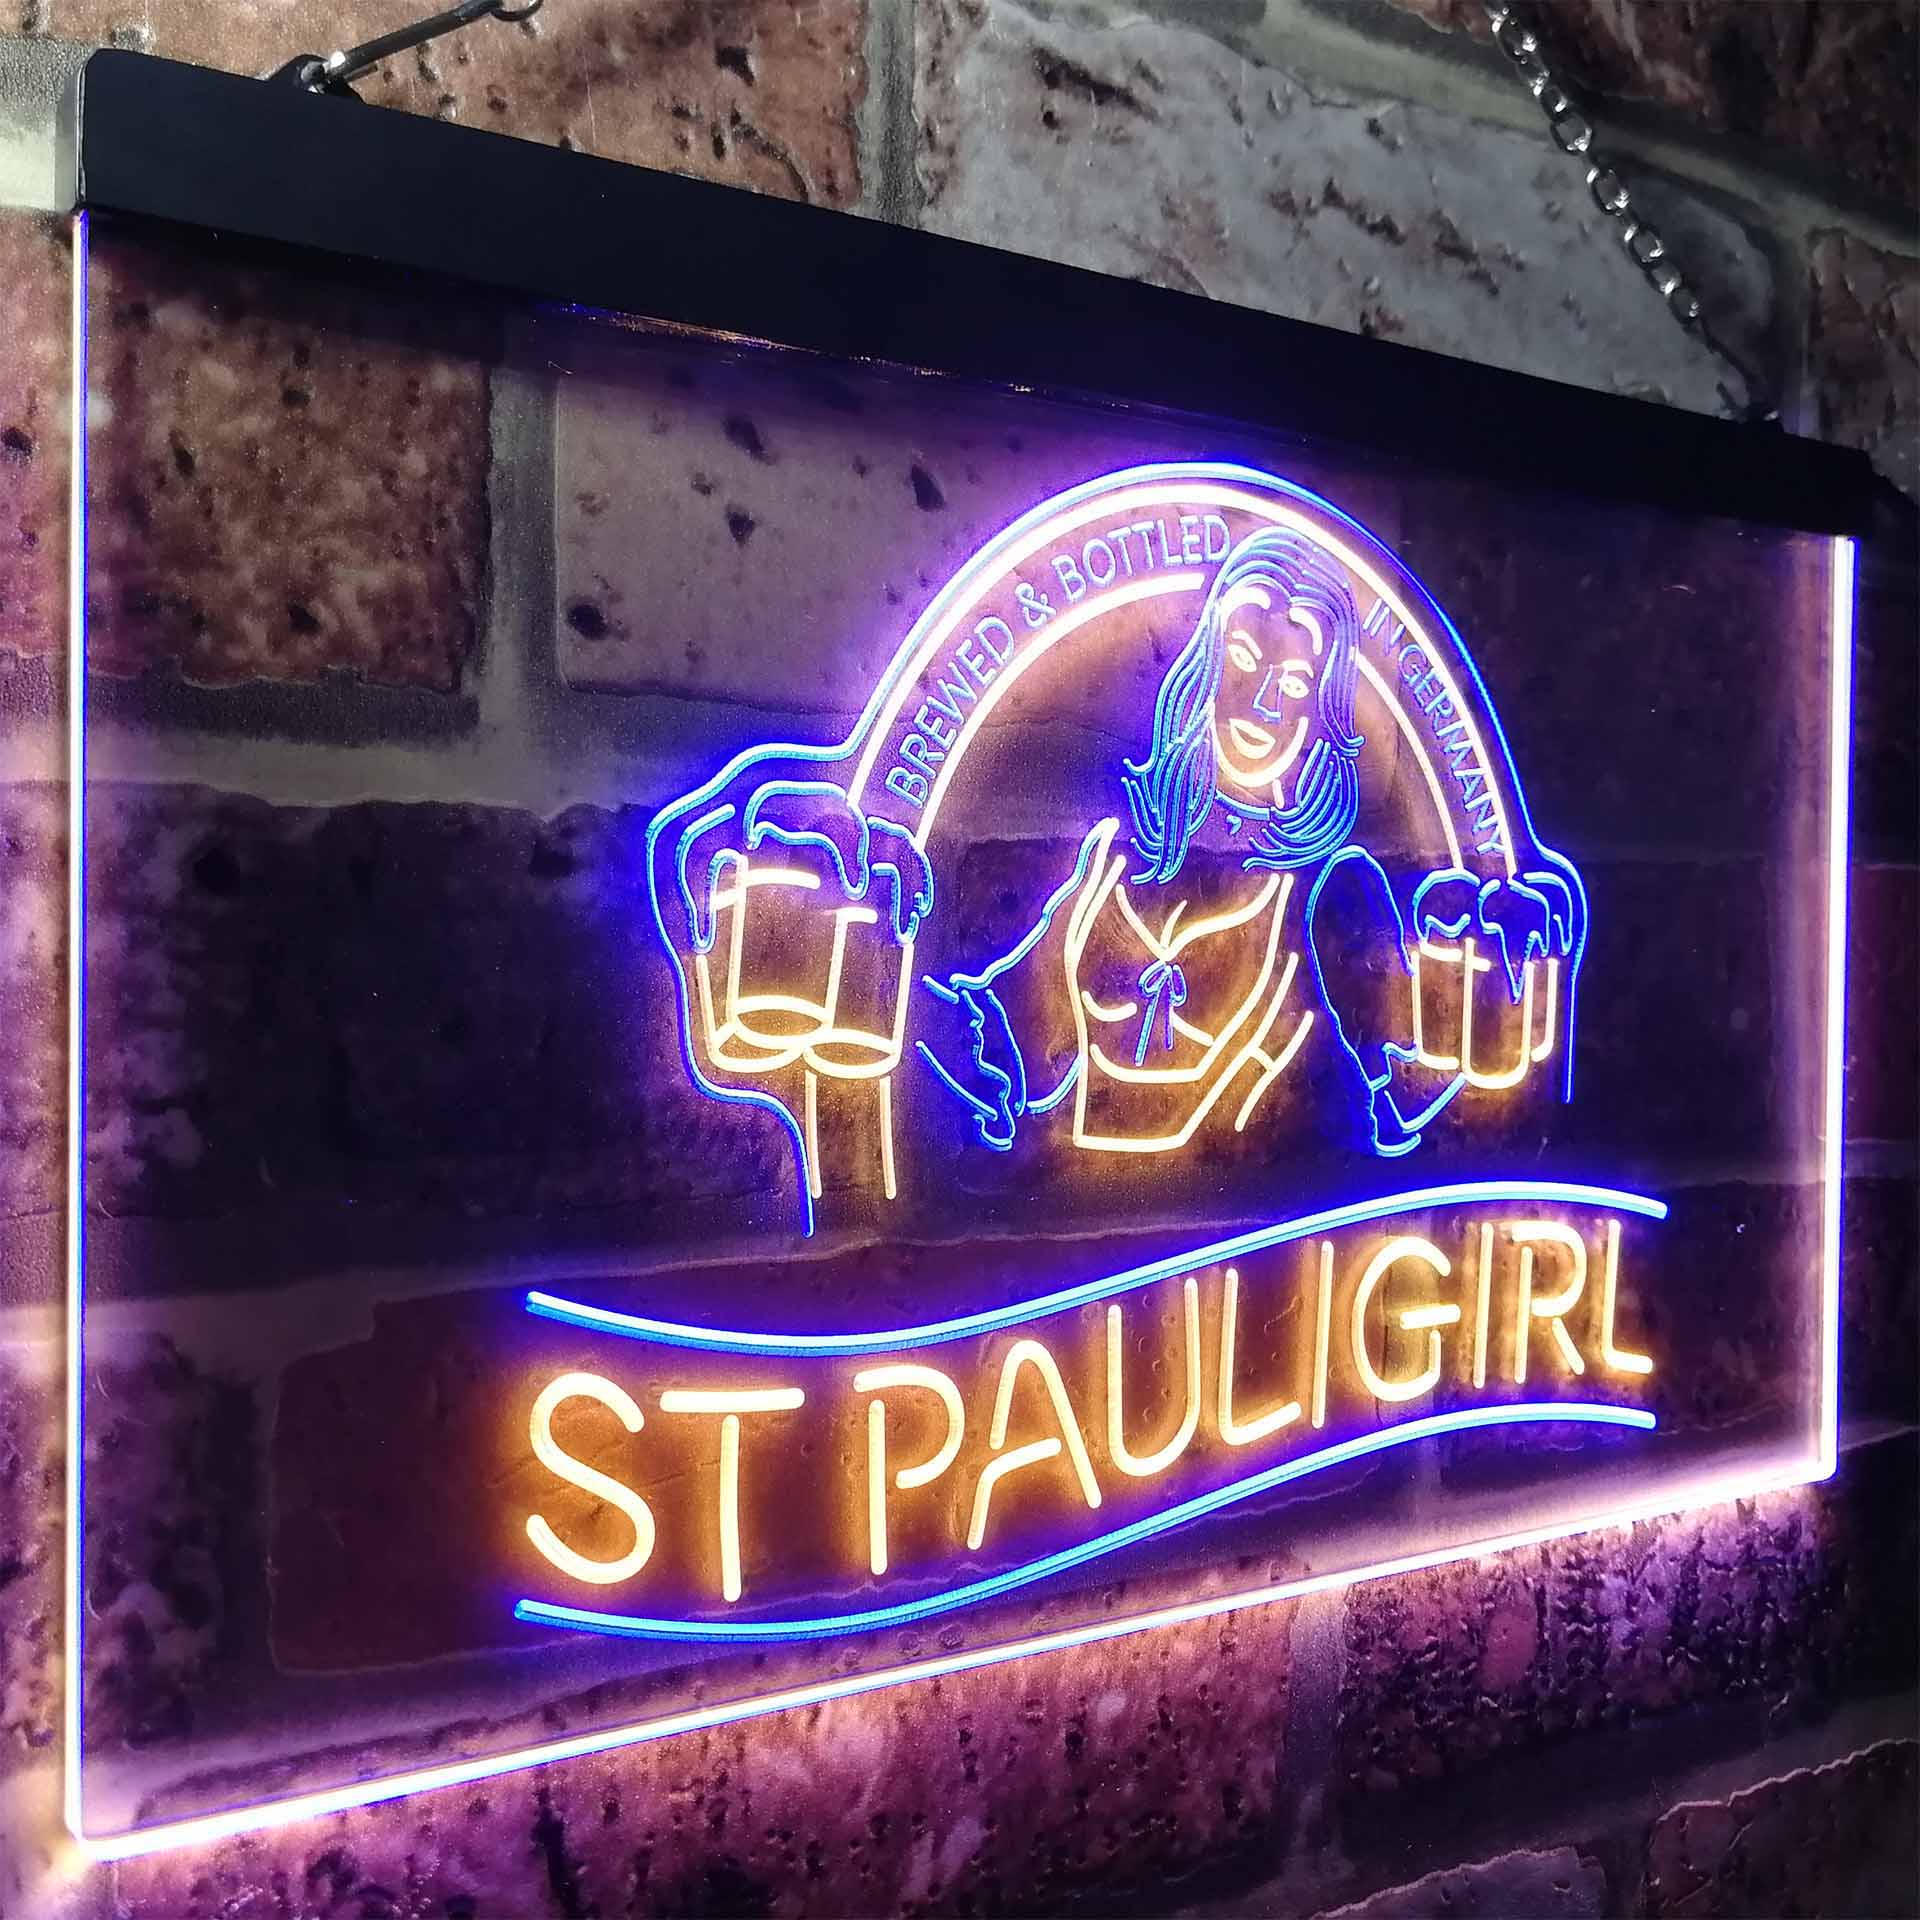 St. Paul Girl Beer Bar Man Cave Neon-Like LED Sign